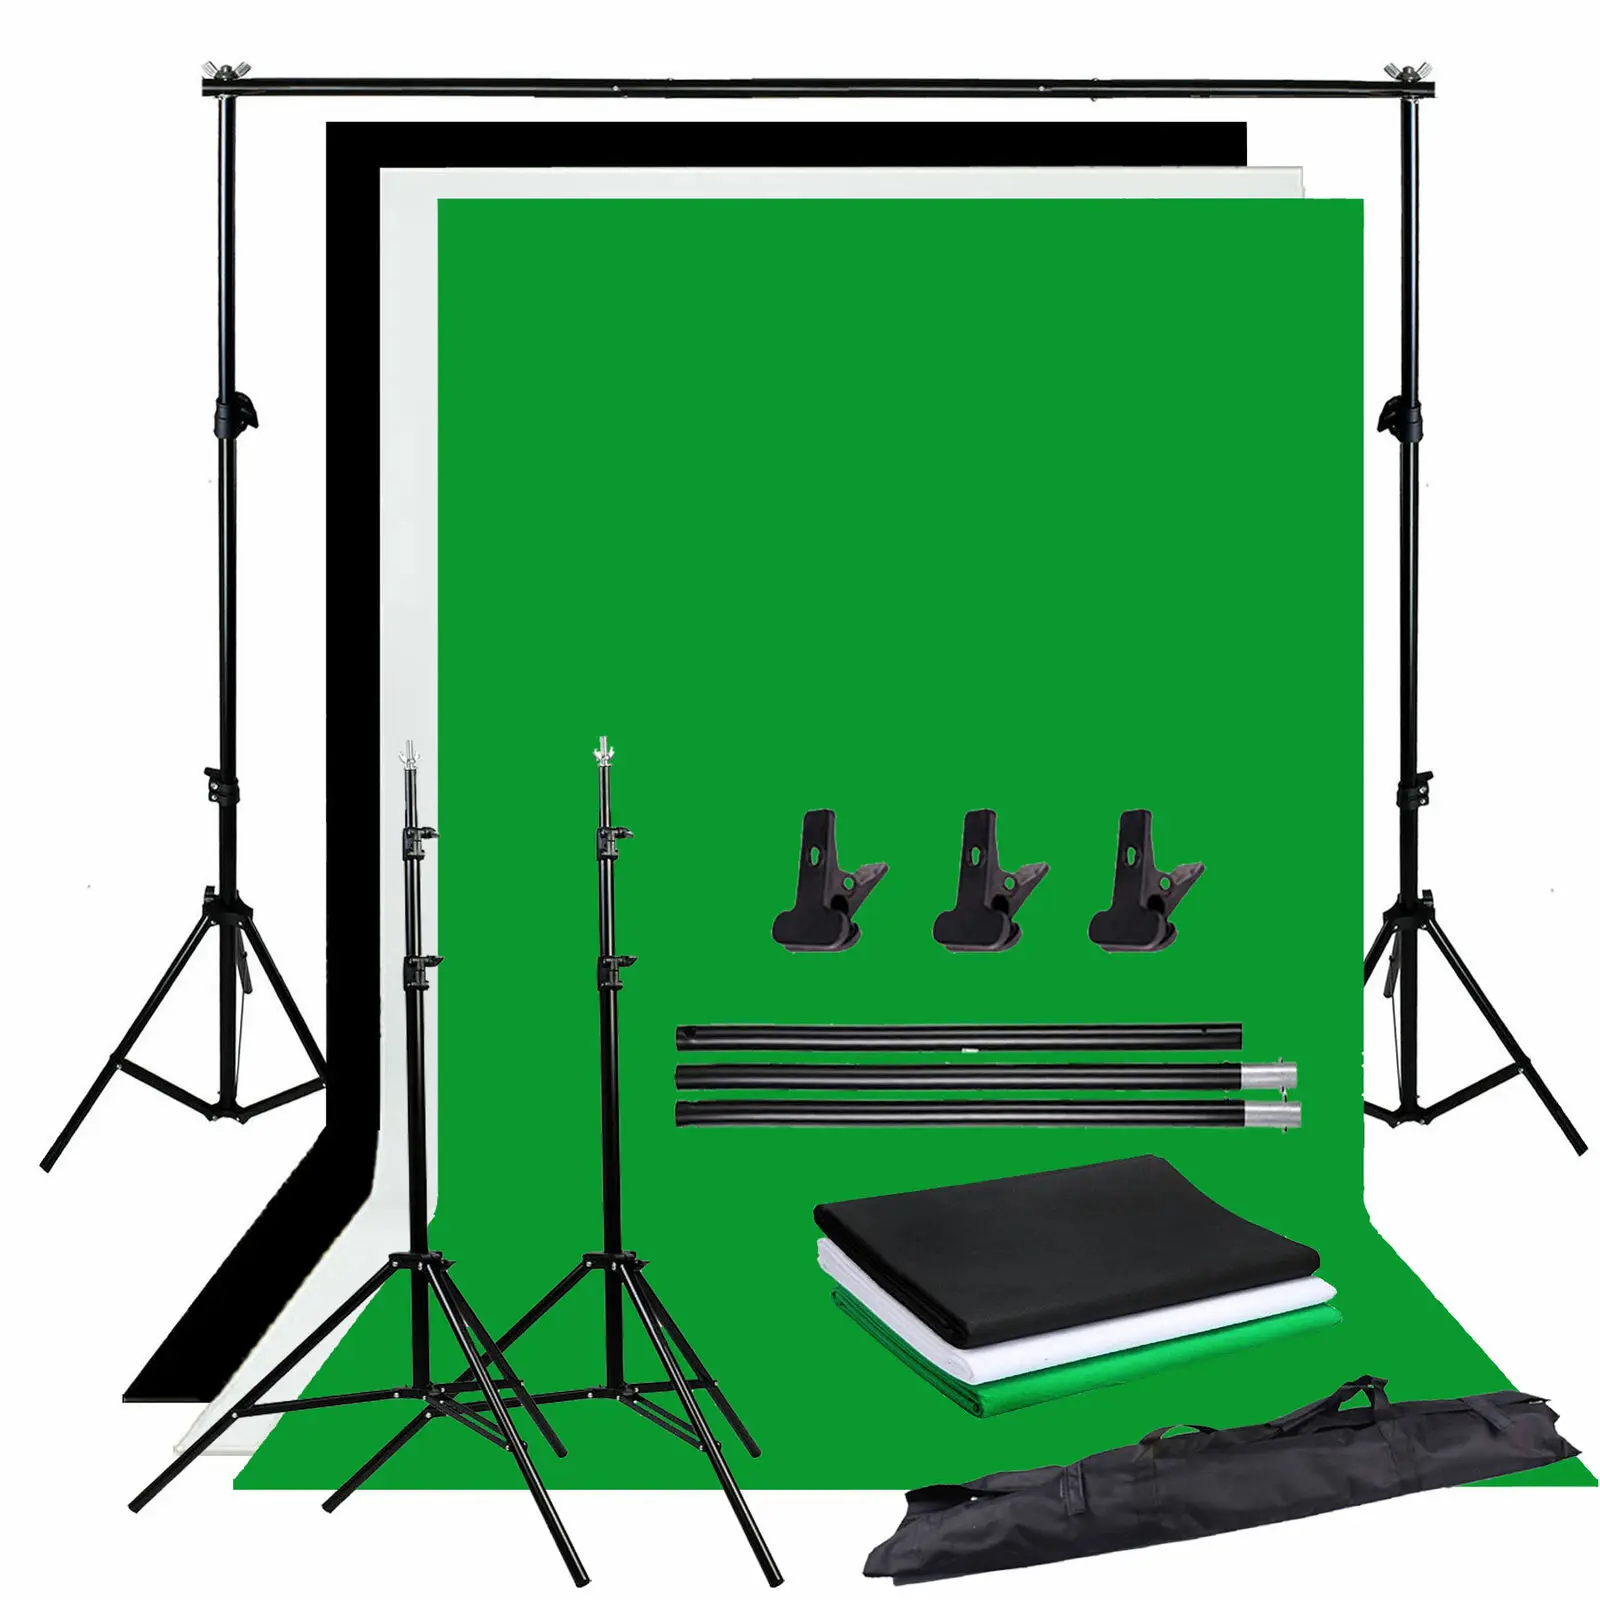 2x3m Black & White Backdrop Screen Background For Photography Studio Lighting UK 